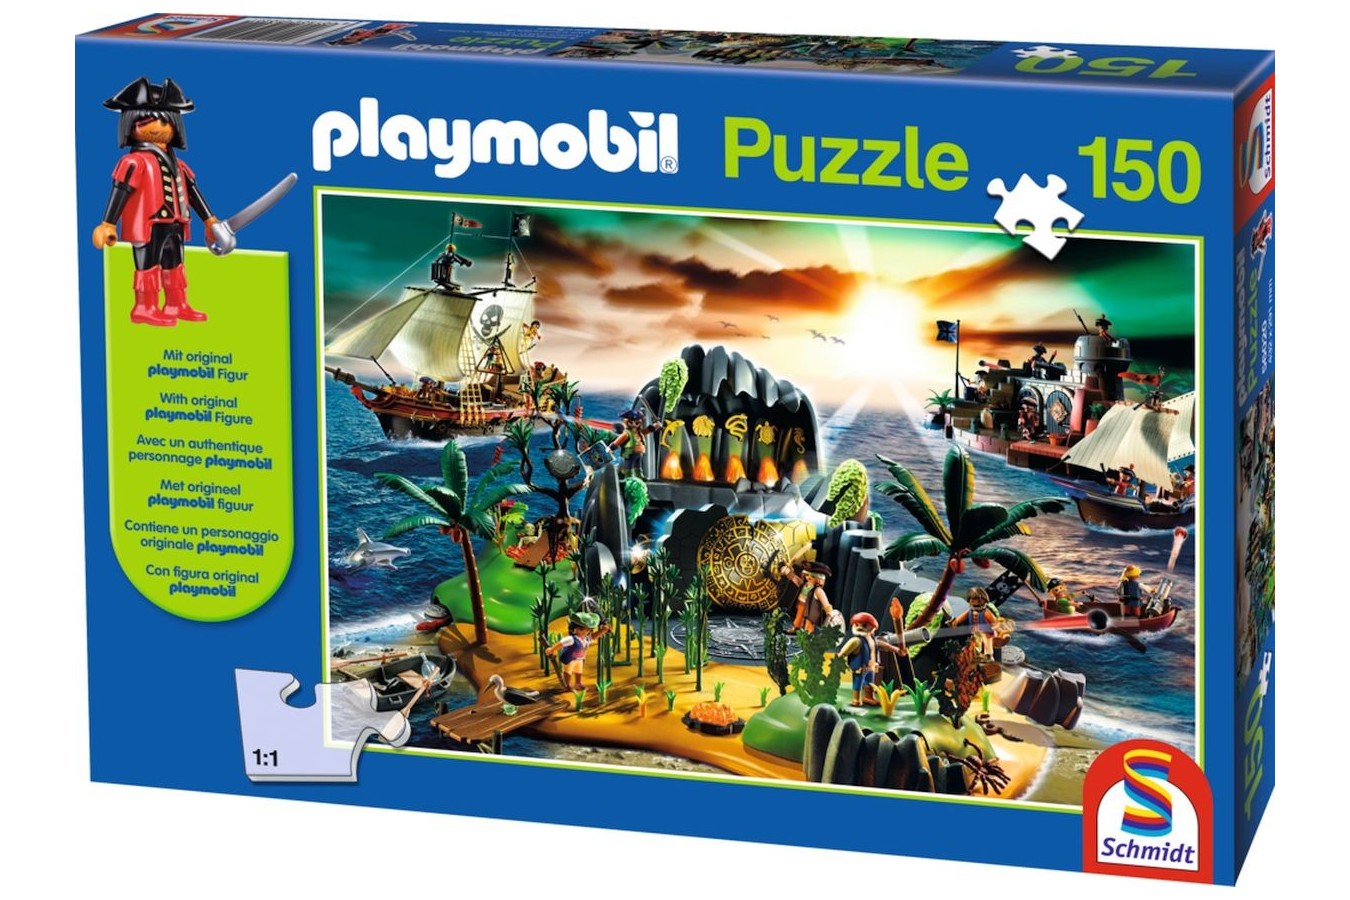 Schmidt Pirate Island Playmobil Jigsaw Puzzle, 150-Piece